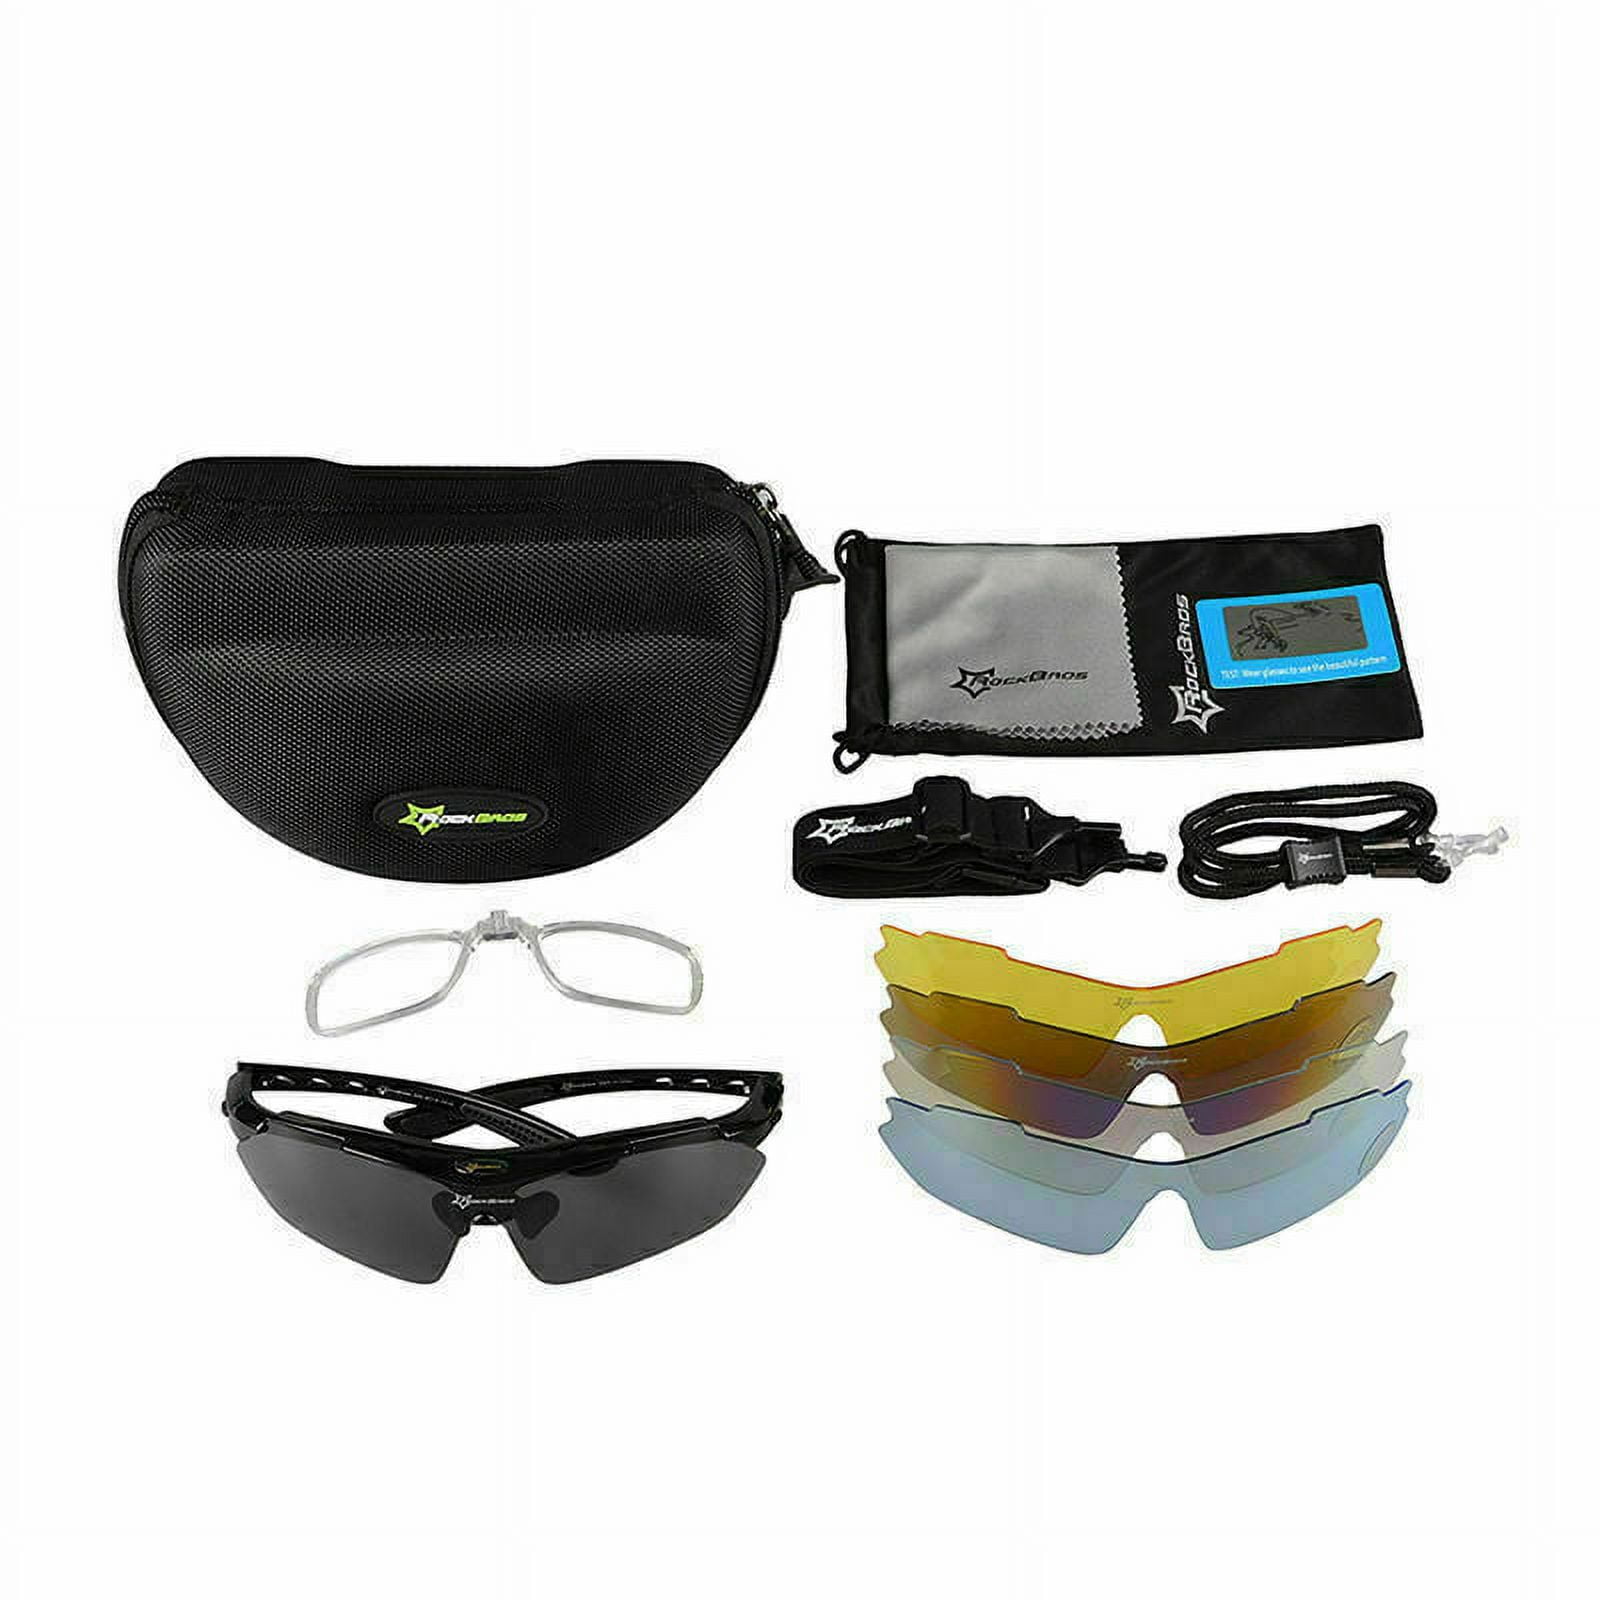 ROCKBROS Cycling Glasses Sport Polarized Sunglasses with 5 Lens, Safety  Band, Myopia Frame, Wraparound lens UV400 